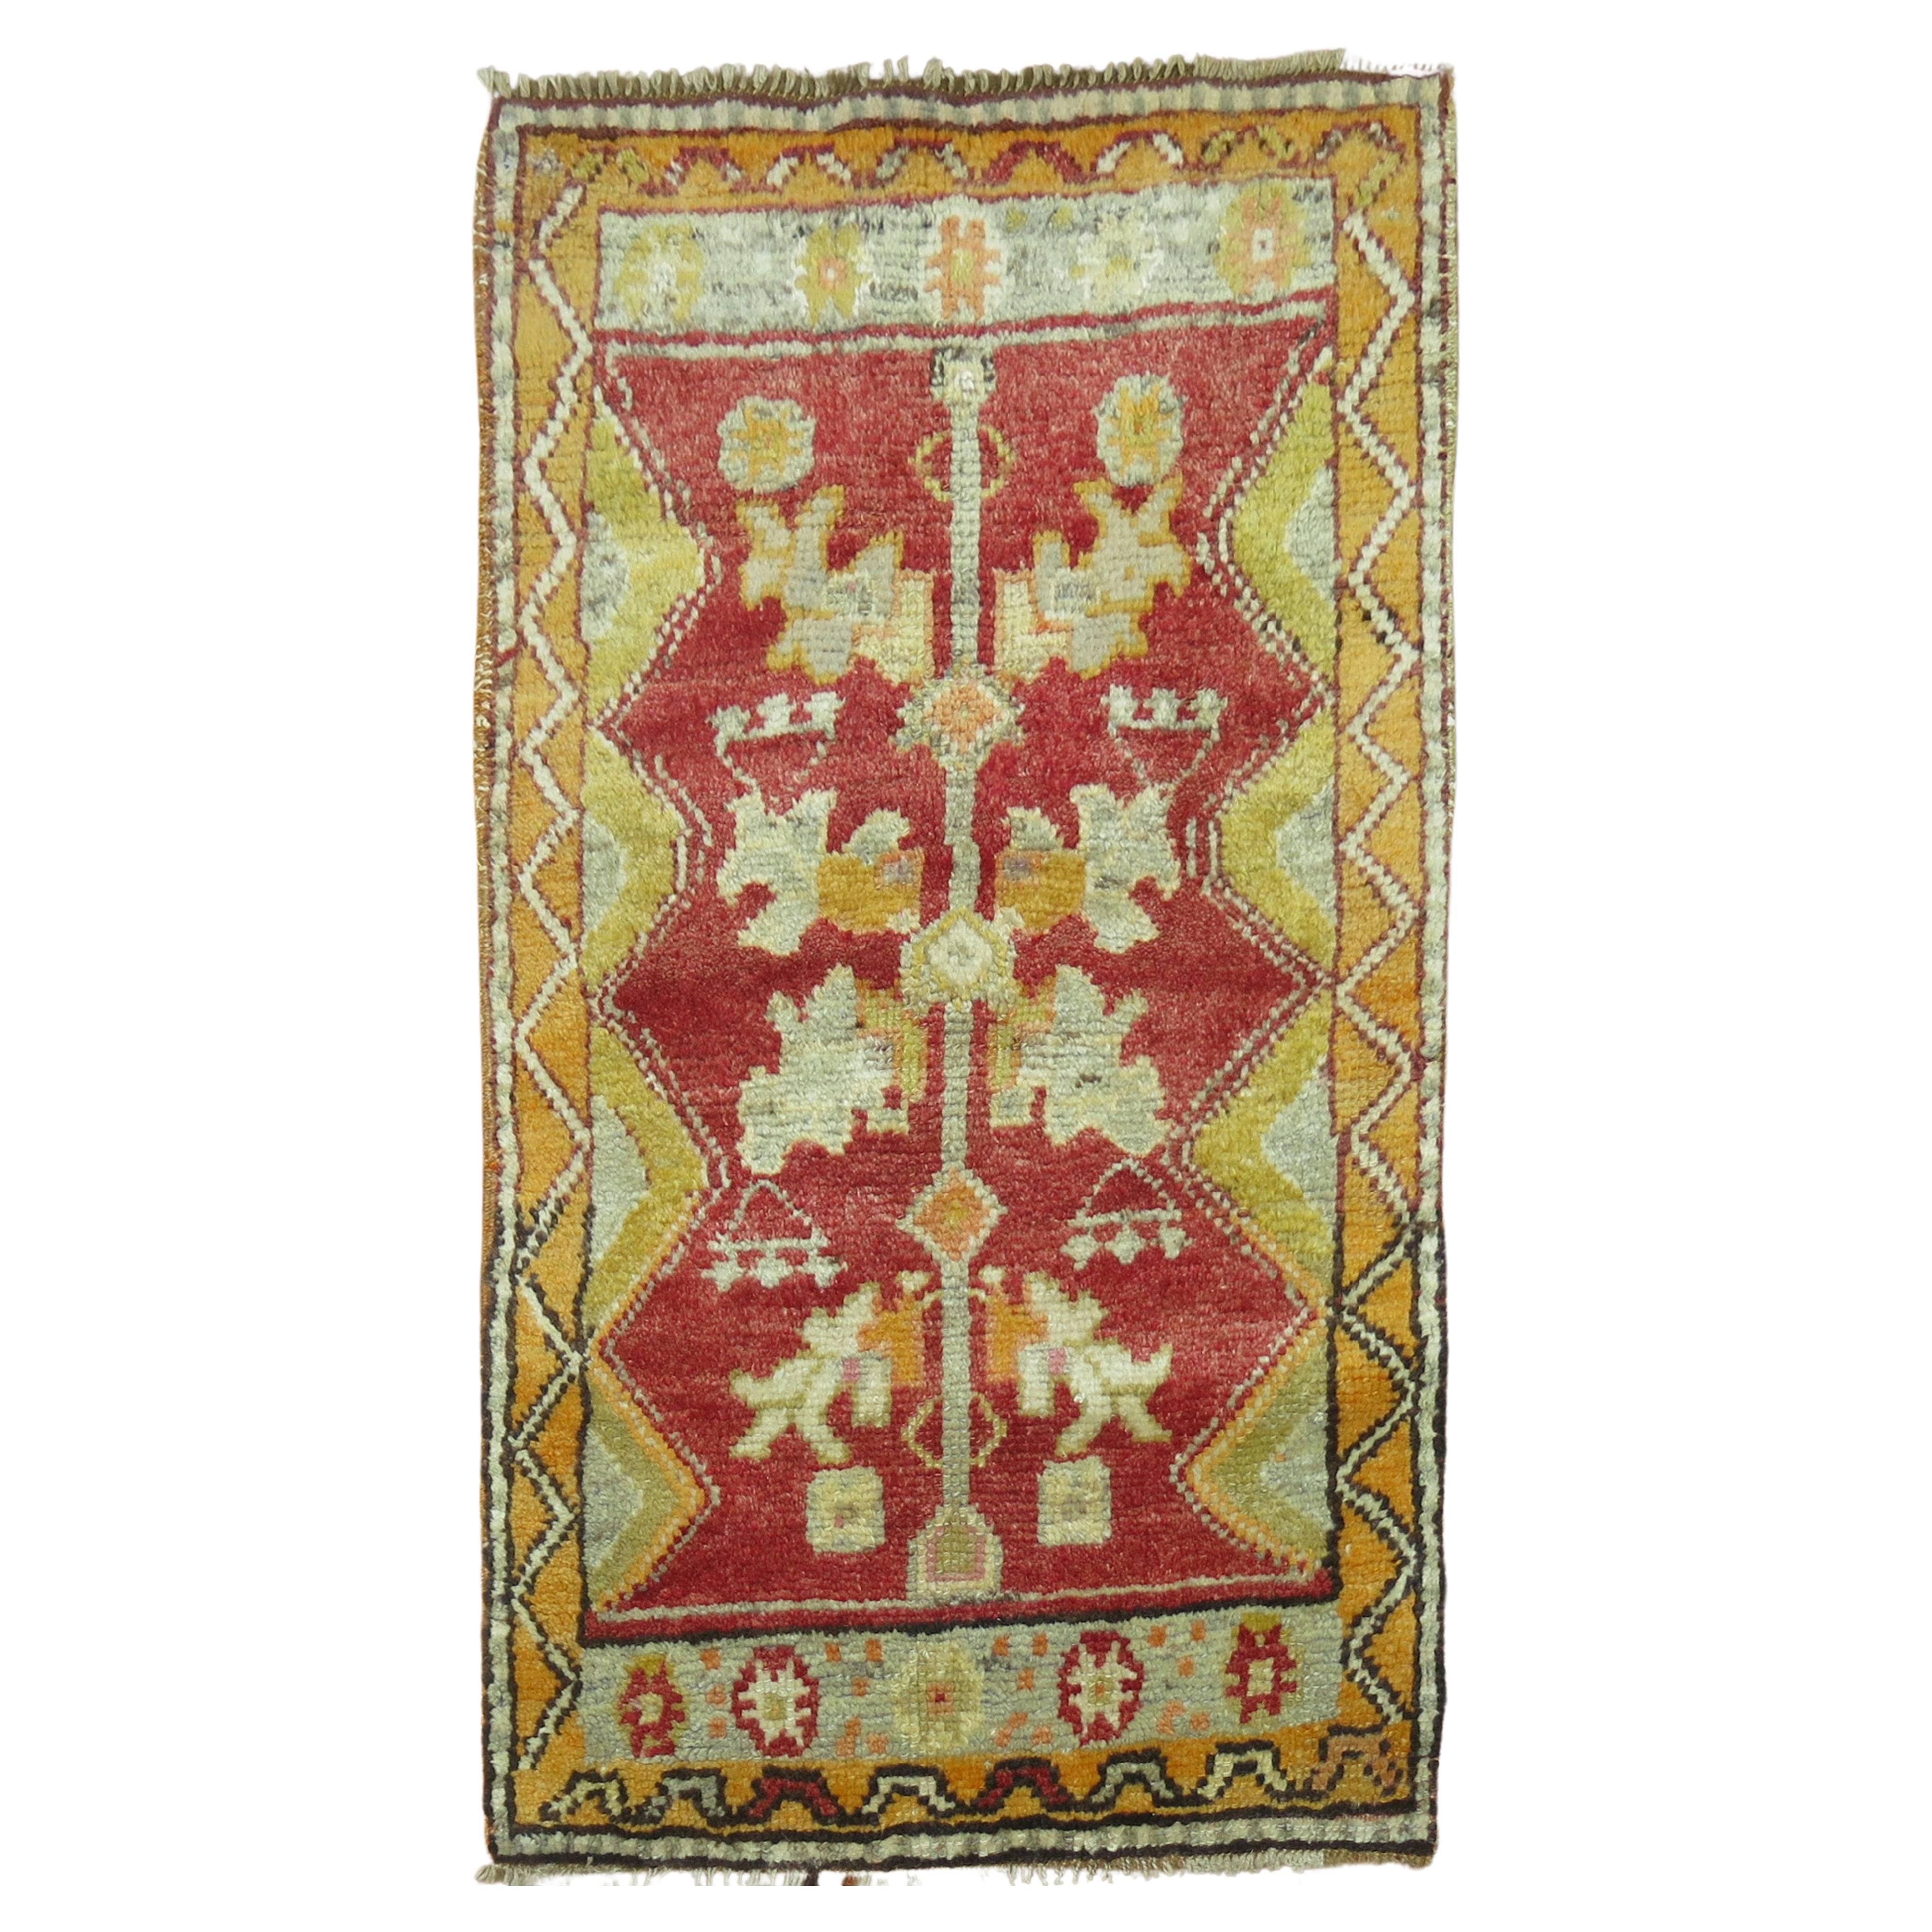 Petit tapis turc de la collection Zabihi